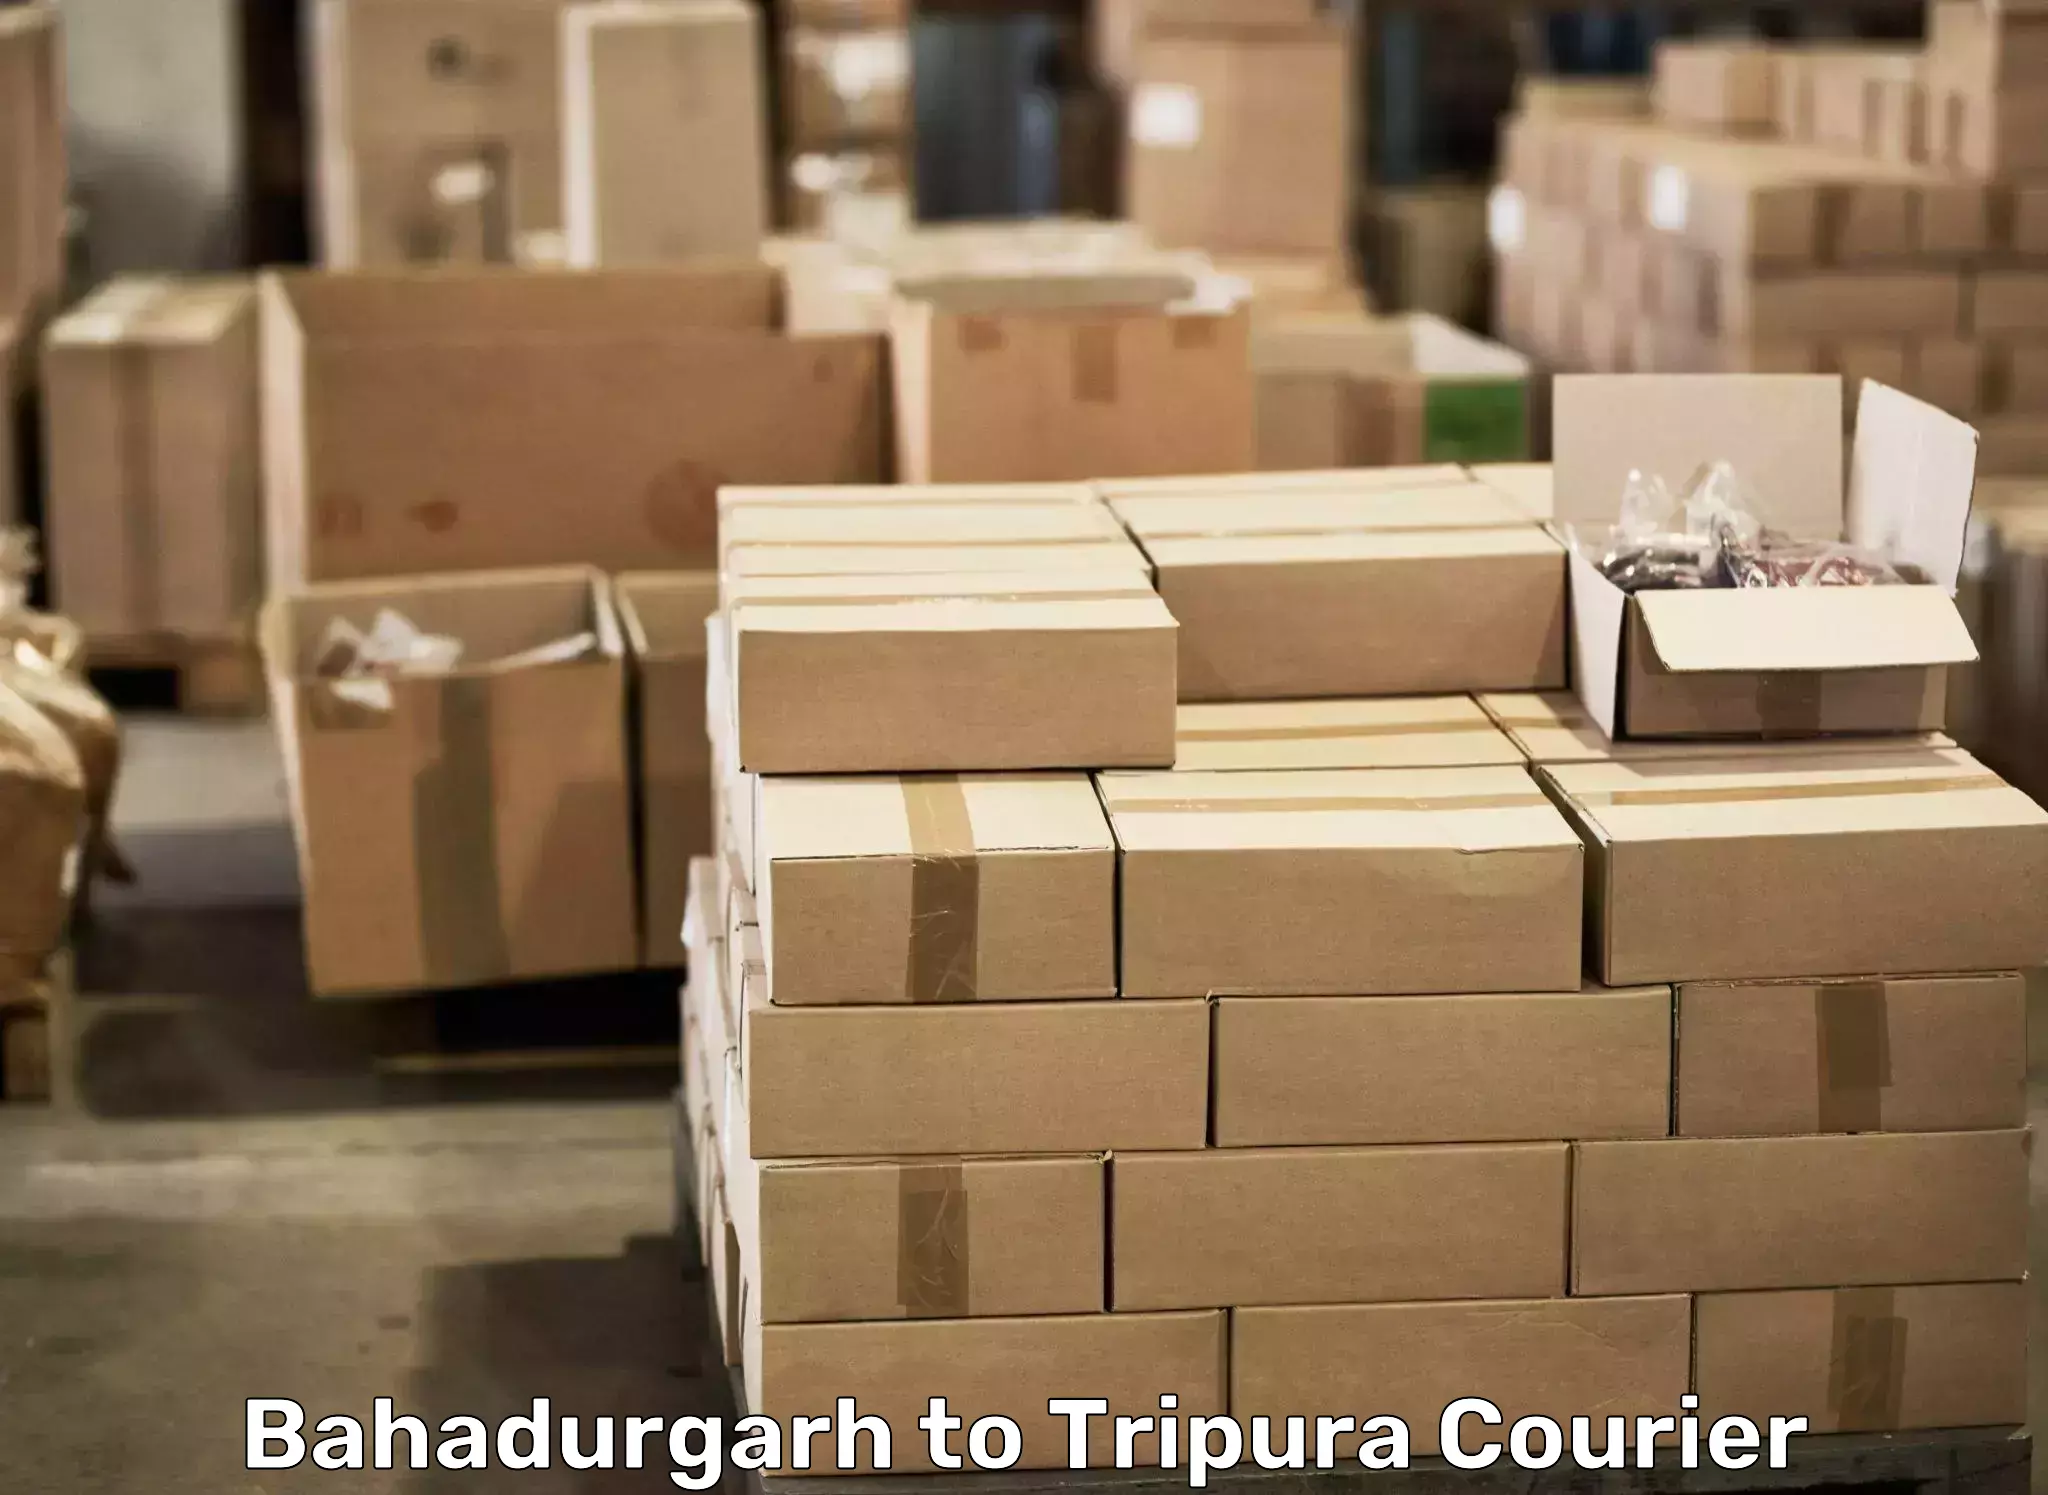 Quality moving and storage Bahadurgarh to Udaipur Tripura